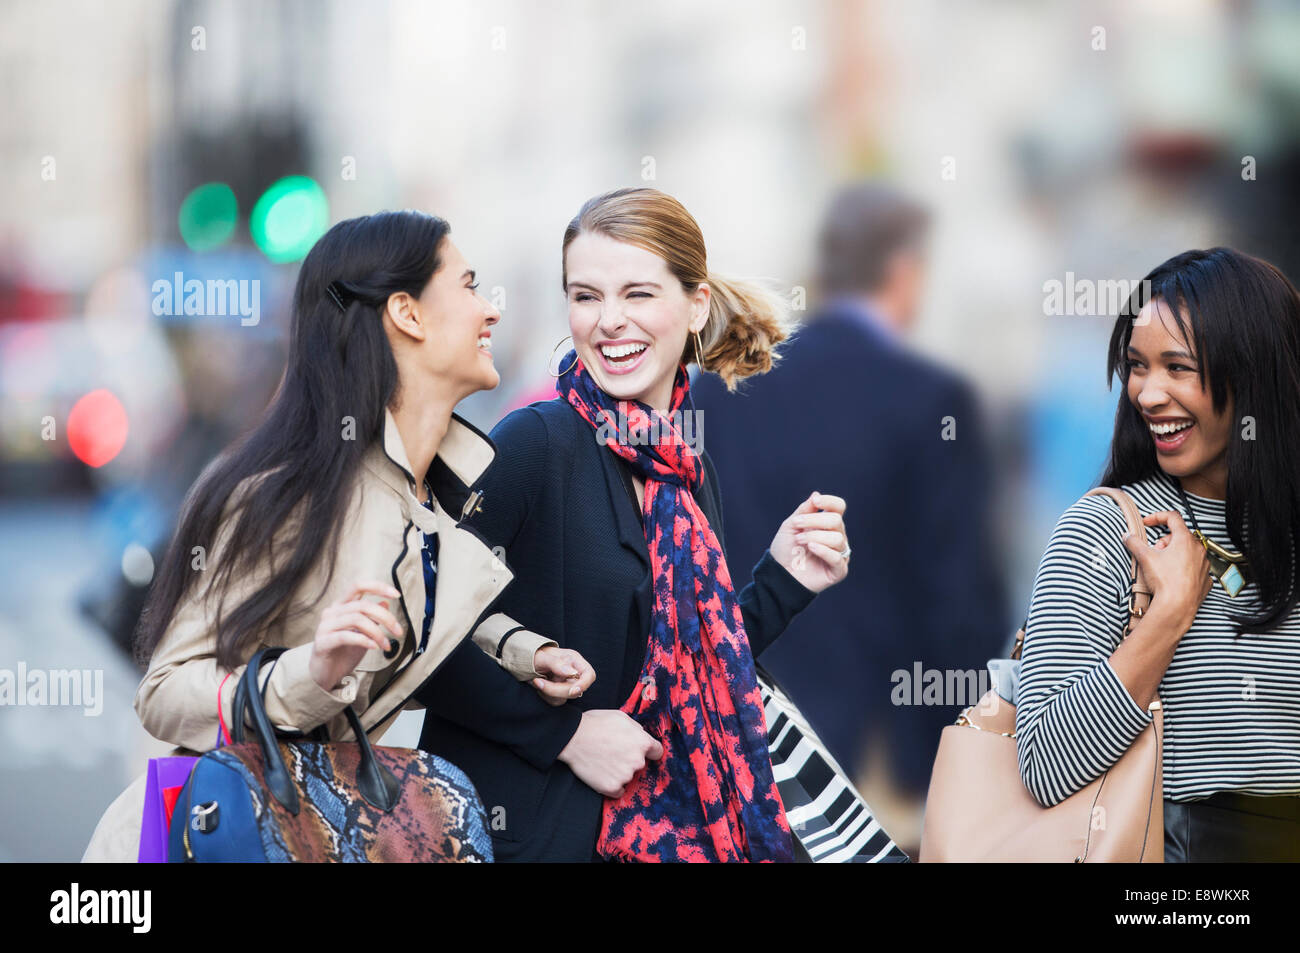 Women walking together on city street Banque D'Images